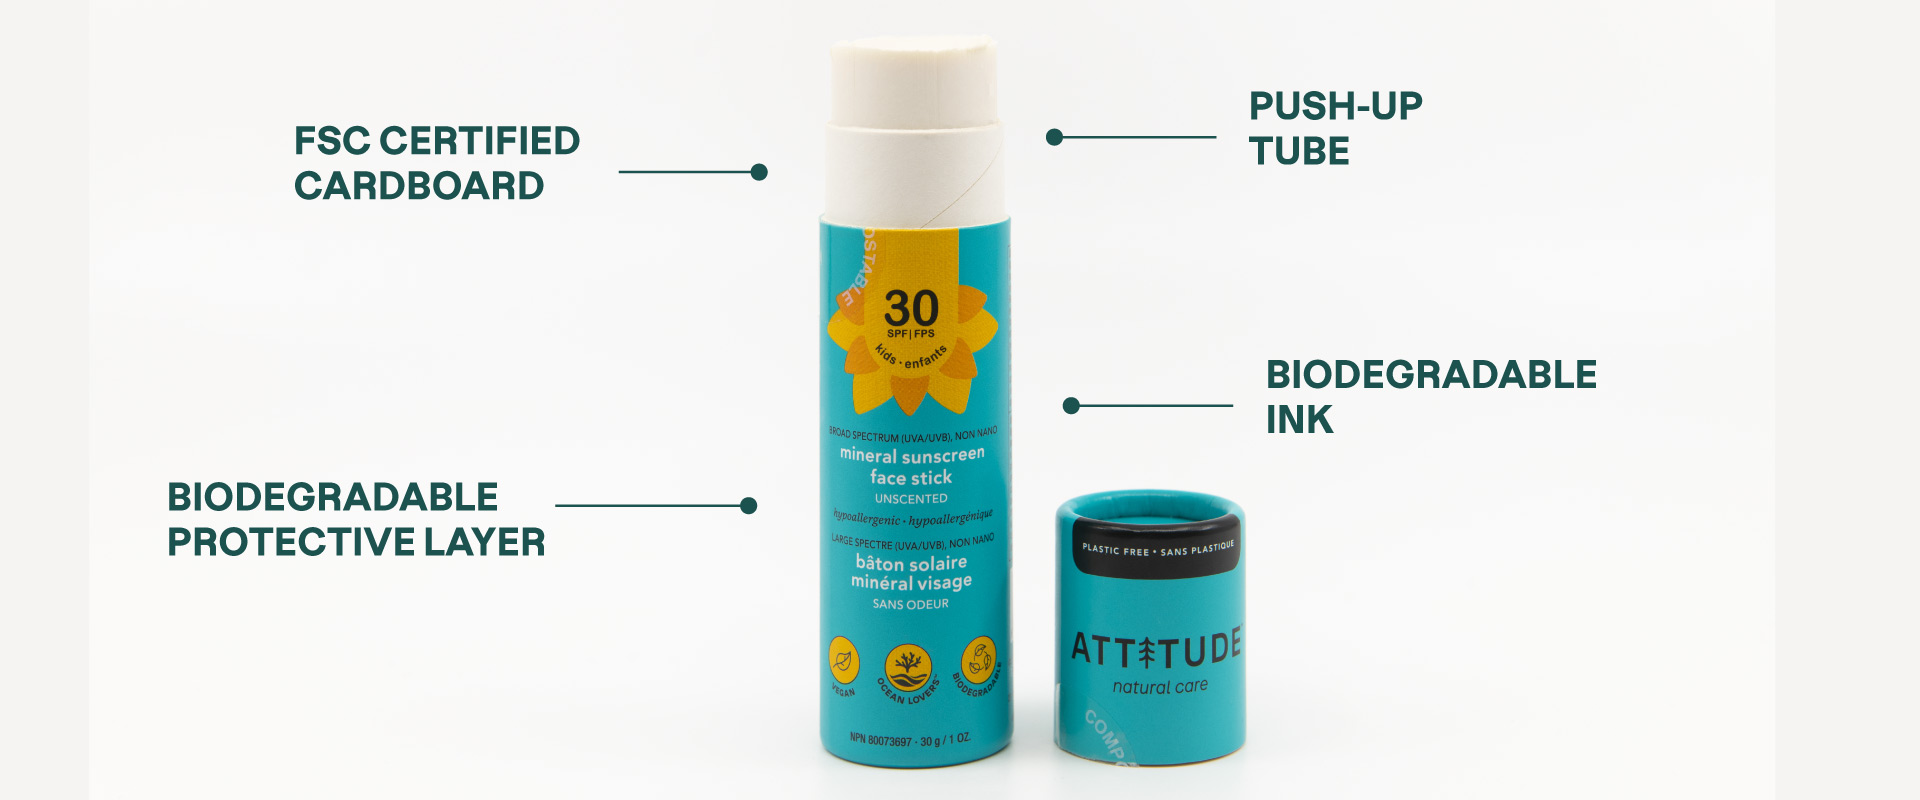 packaging sunscreen plastic-free ATTITUDE